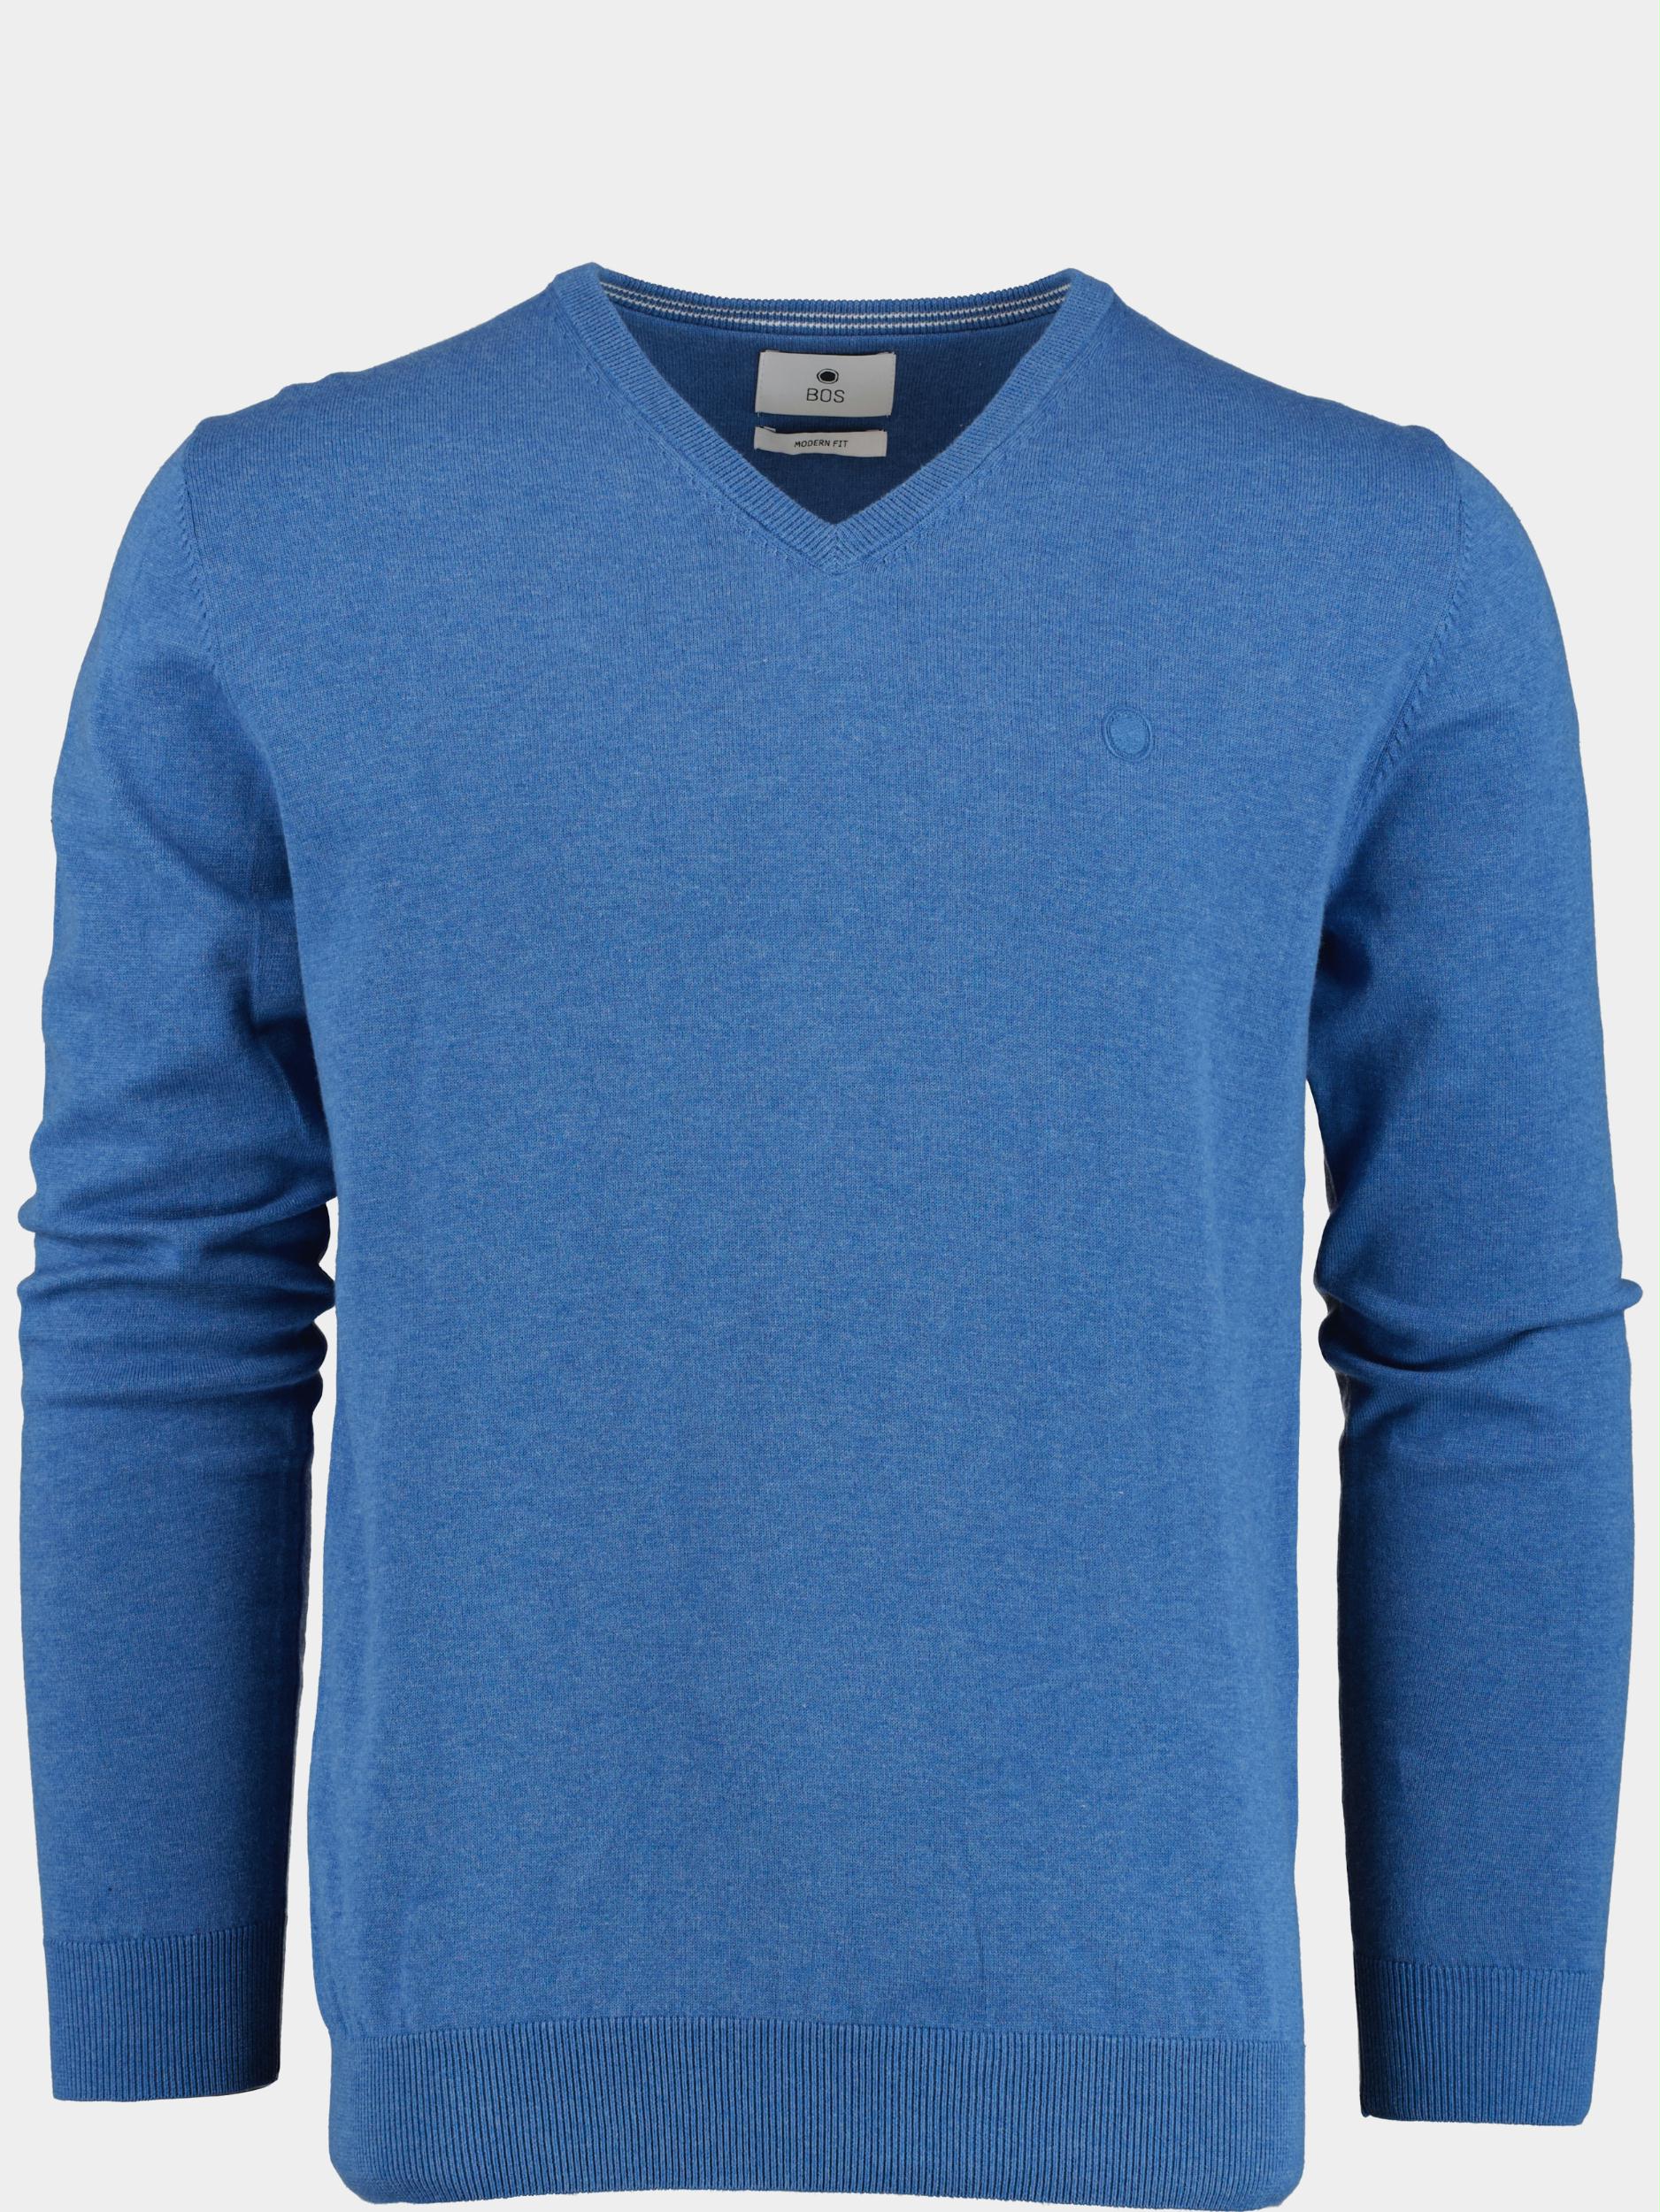 Bos Bright Blue Pullover Blauw Vince V-neck Pullover Flatkni 23105VI01BO/268 jeans blue